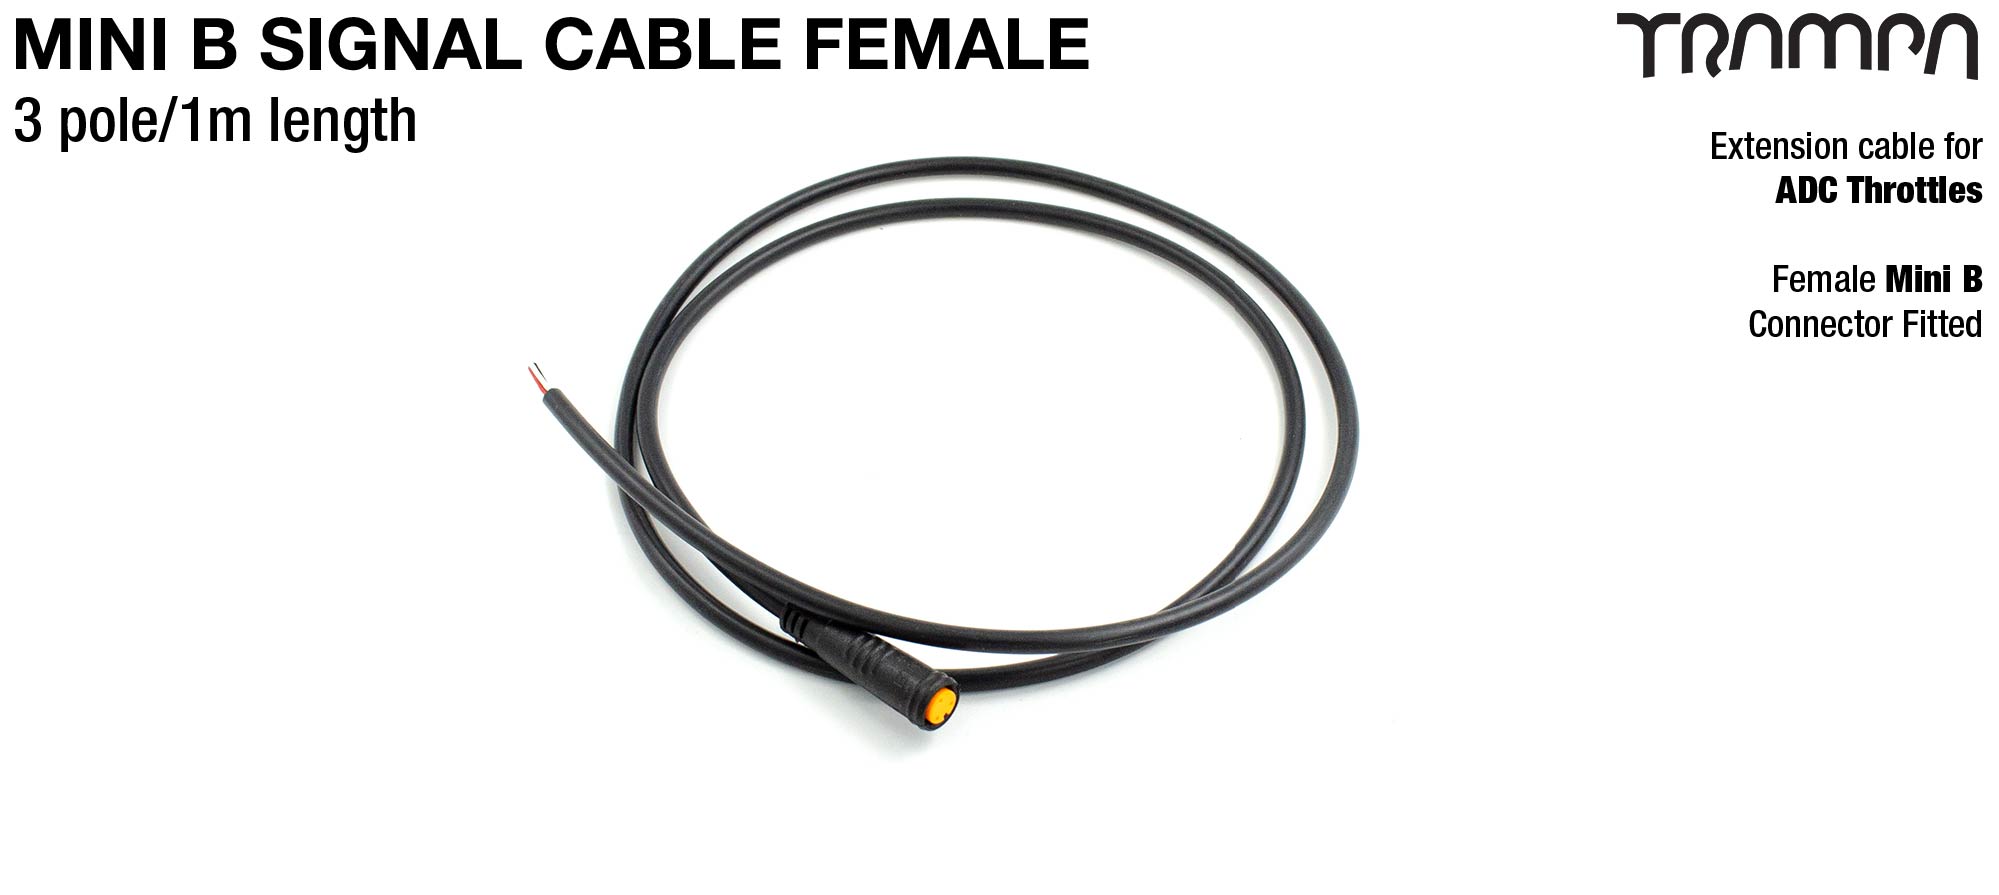 Joules Extension Cable - 90cm 